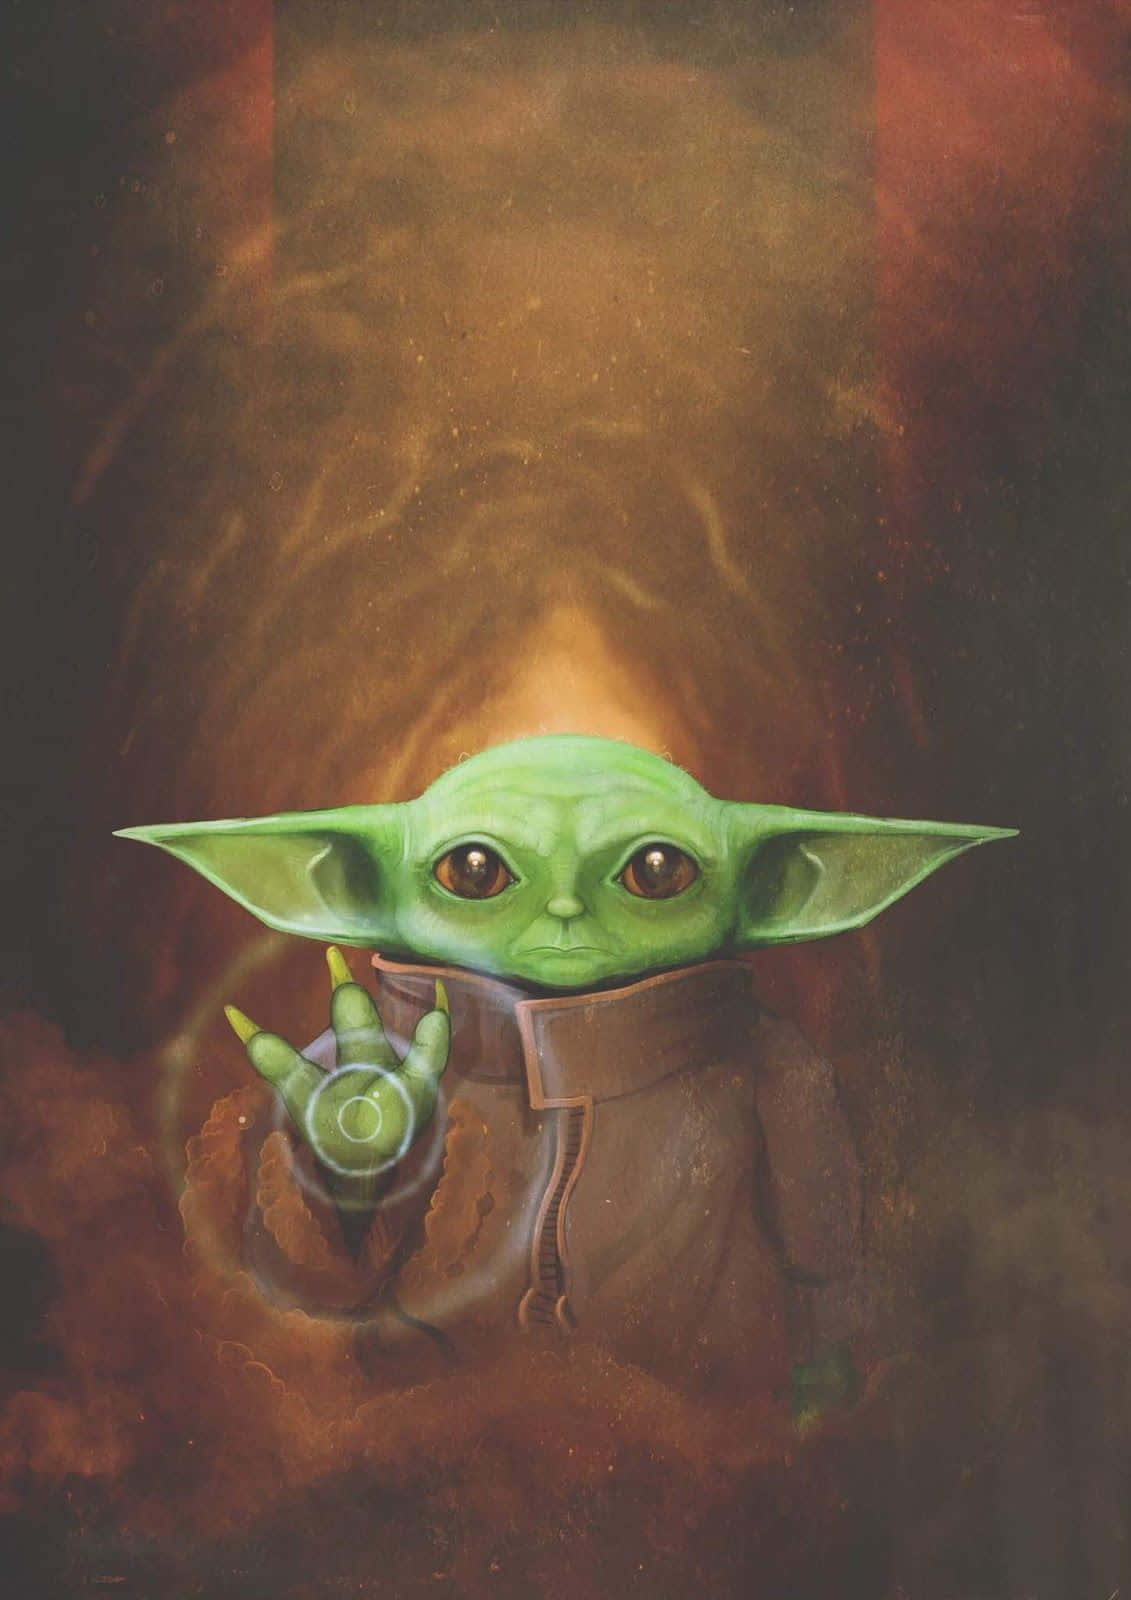 Adorable Baby Yoda with Its Big Black Eyes